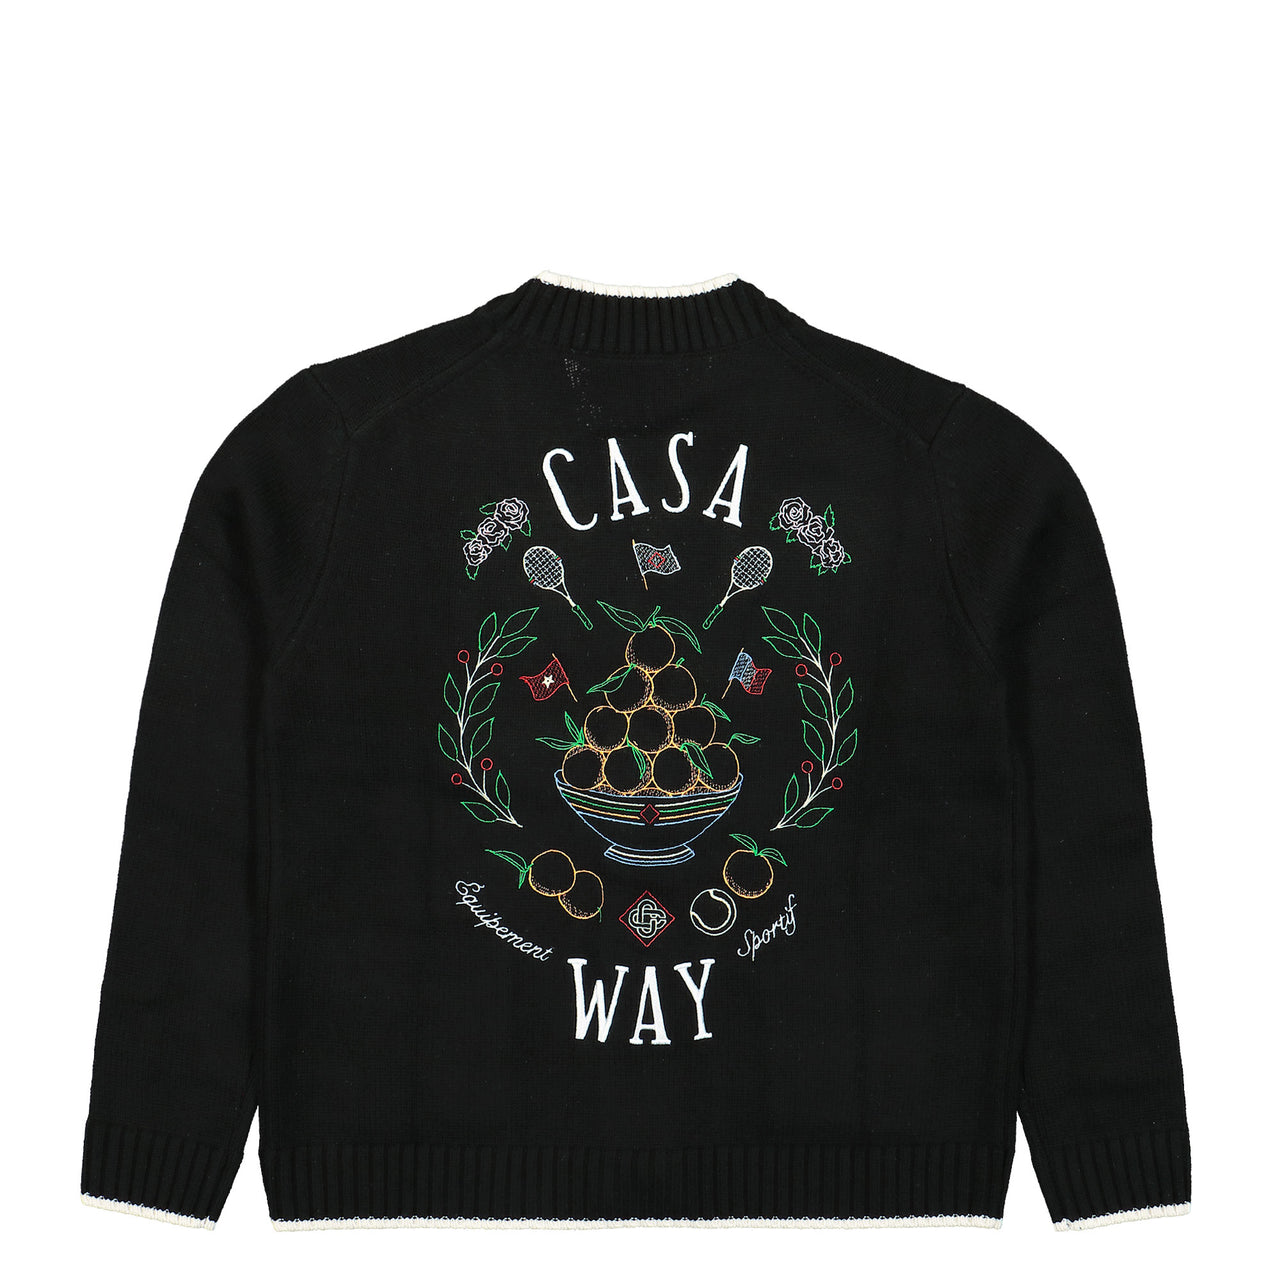 Embroidered Casa Way Cardigan